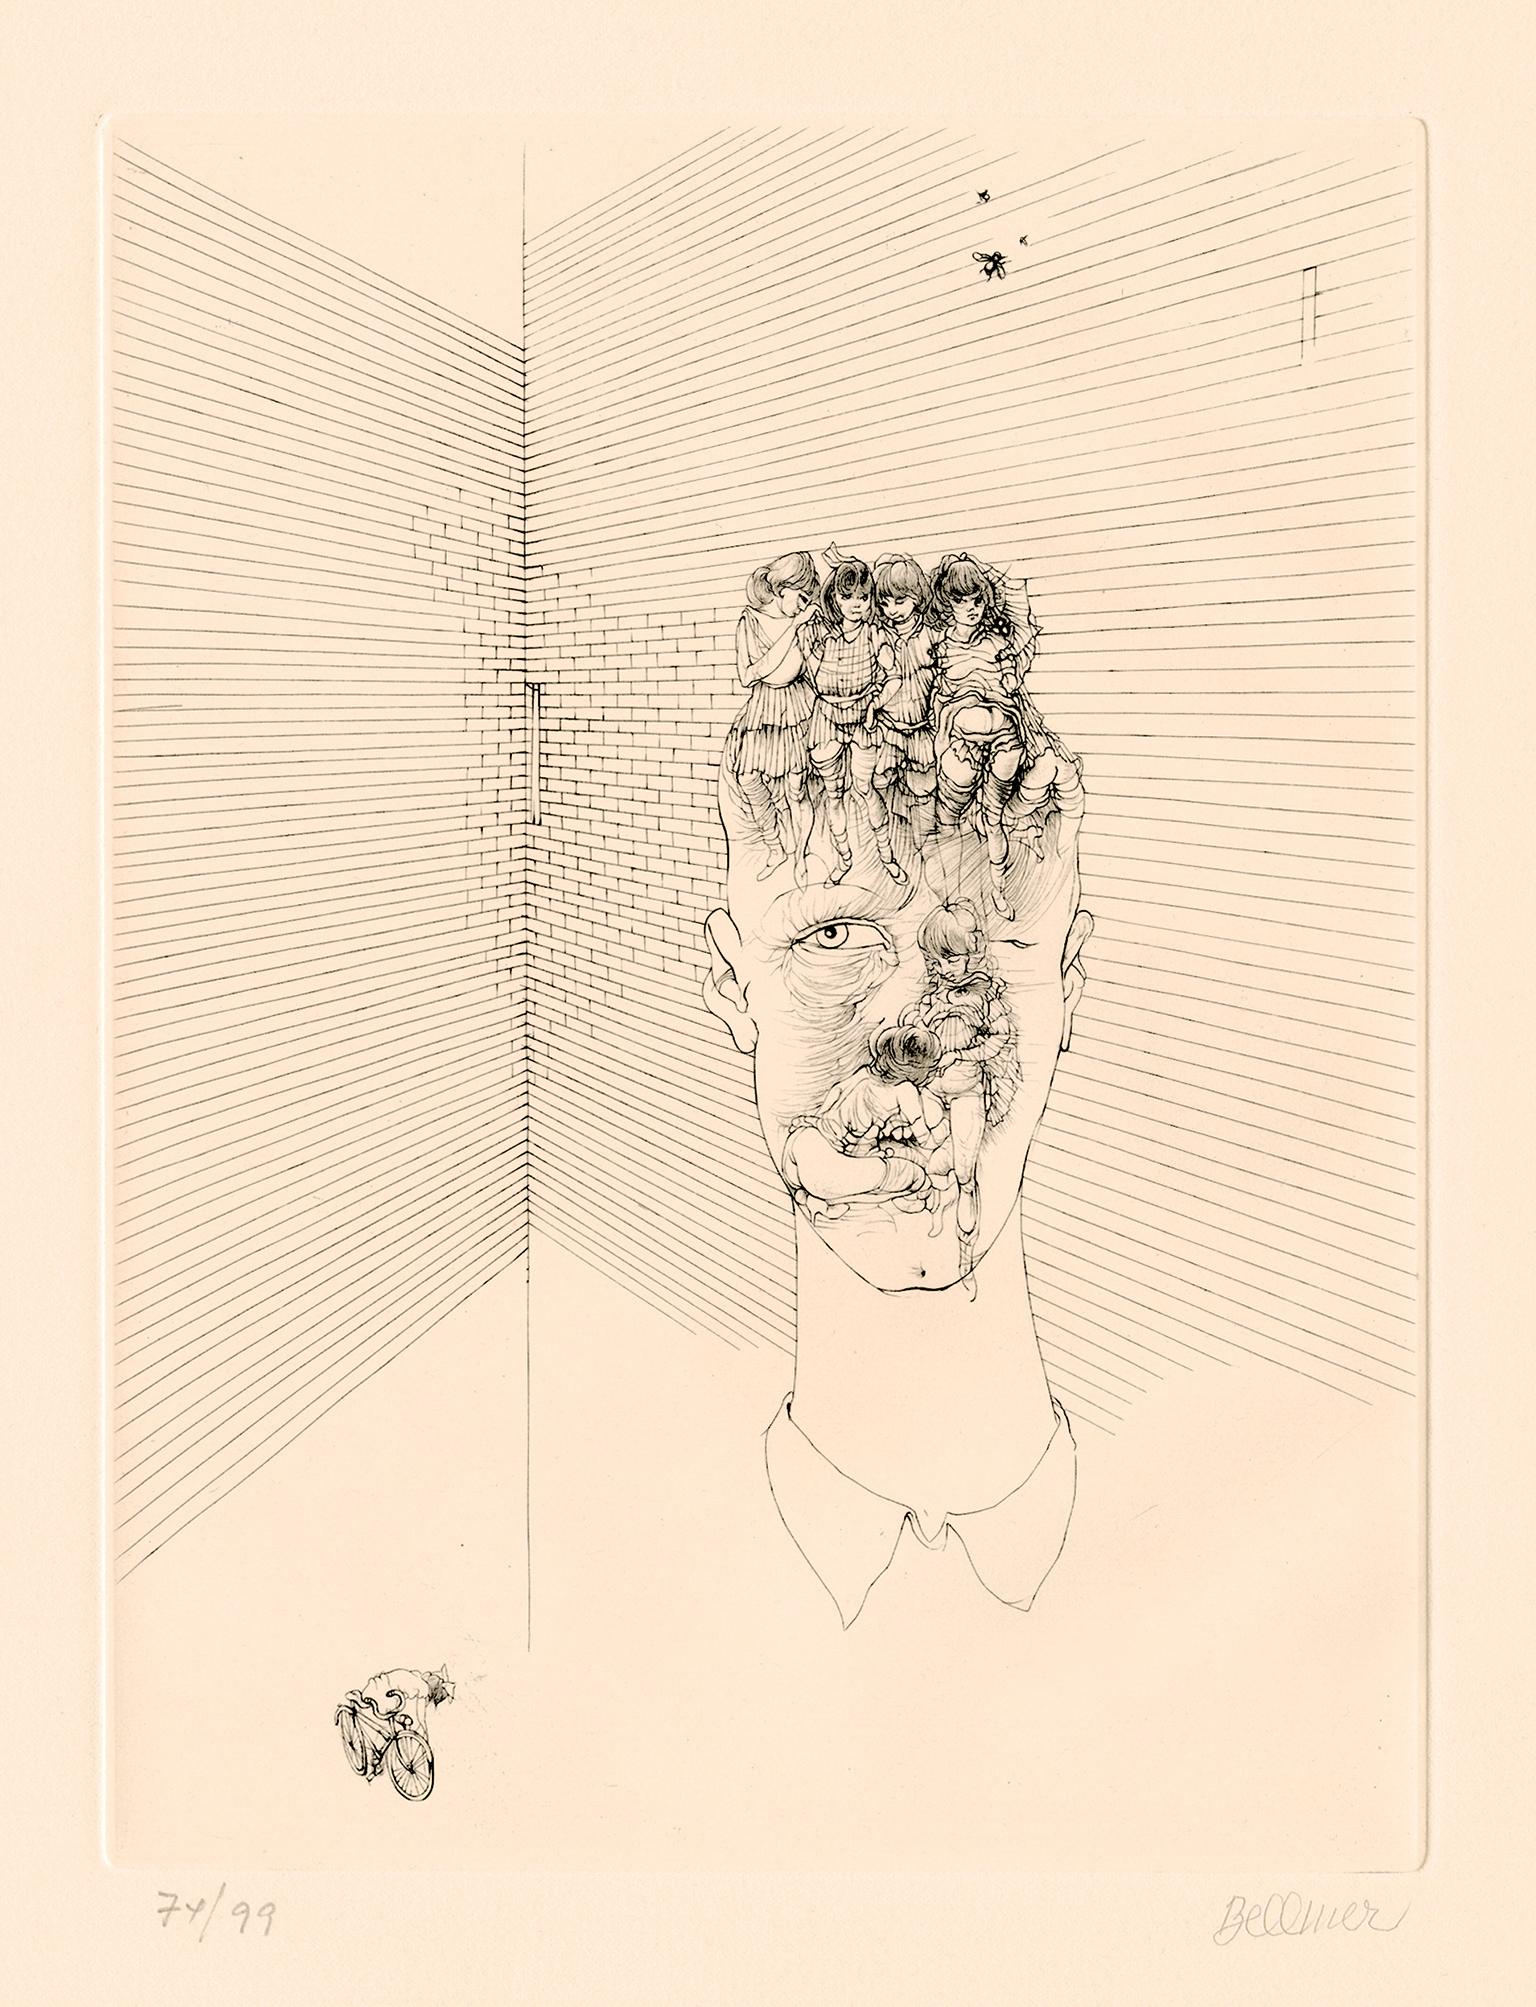 Hans Bellmer Abstract Print - 'Blue Eyes' — 1970s Erotic Surrealism